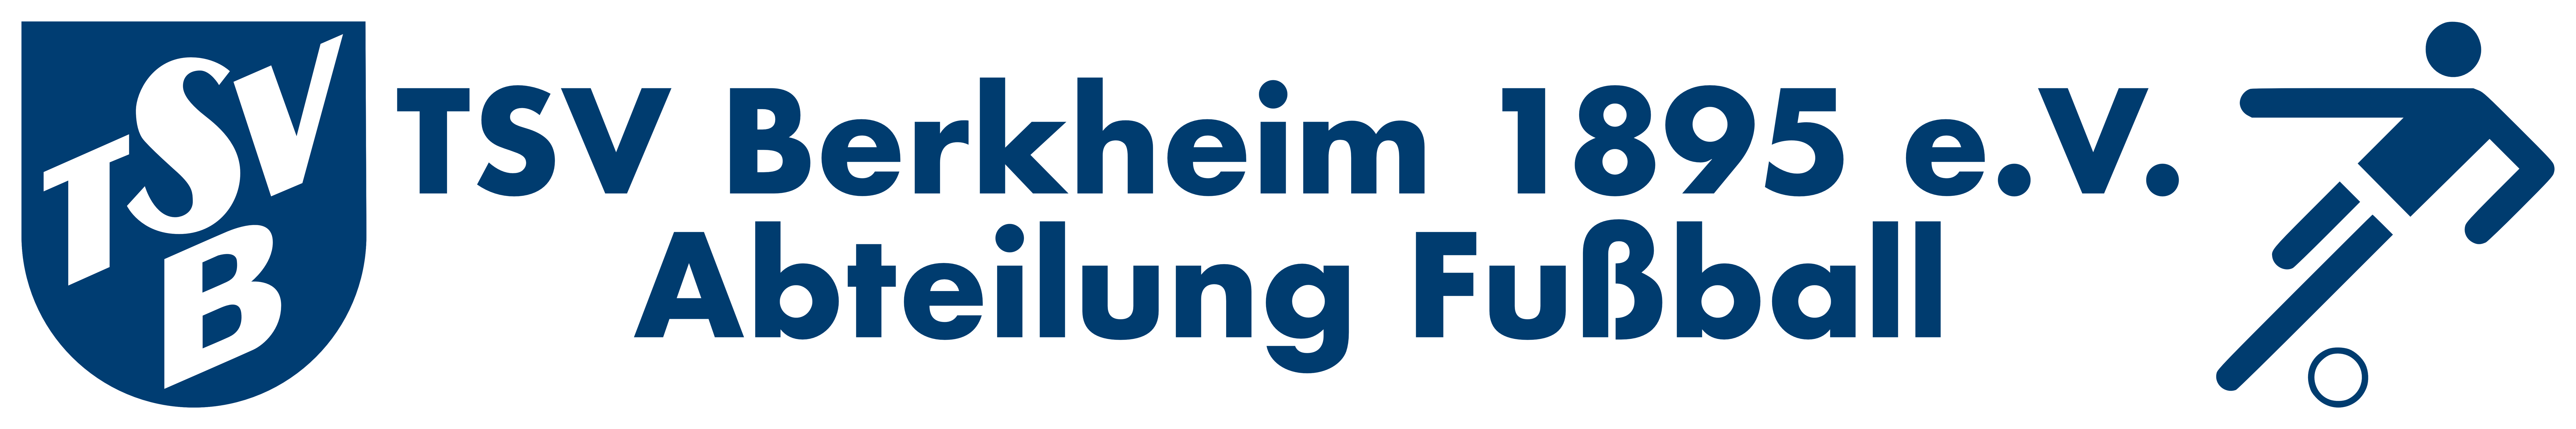 TSV Berkheim Fußball Logo